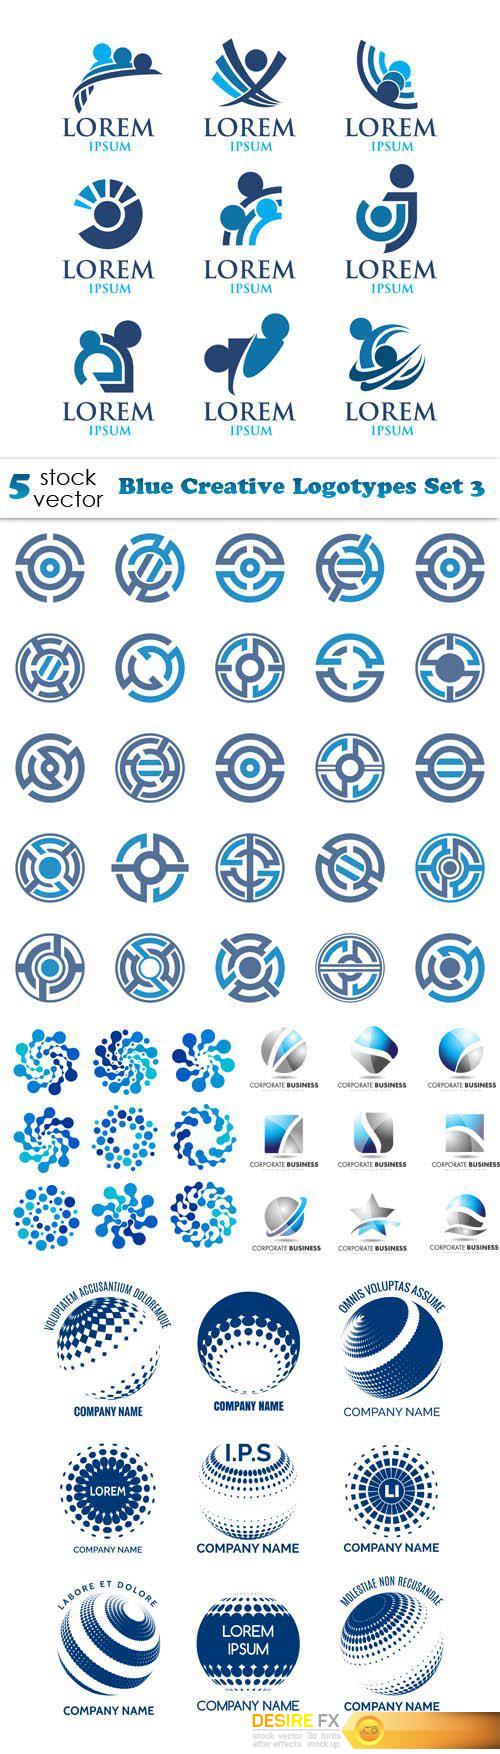 Vectors - Blue Creative Logotypes Set 3